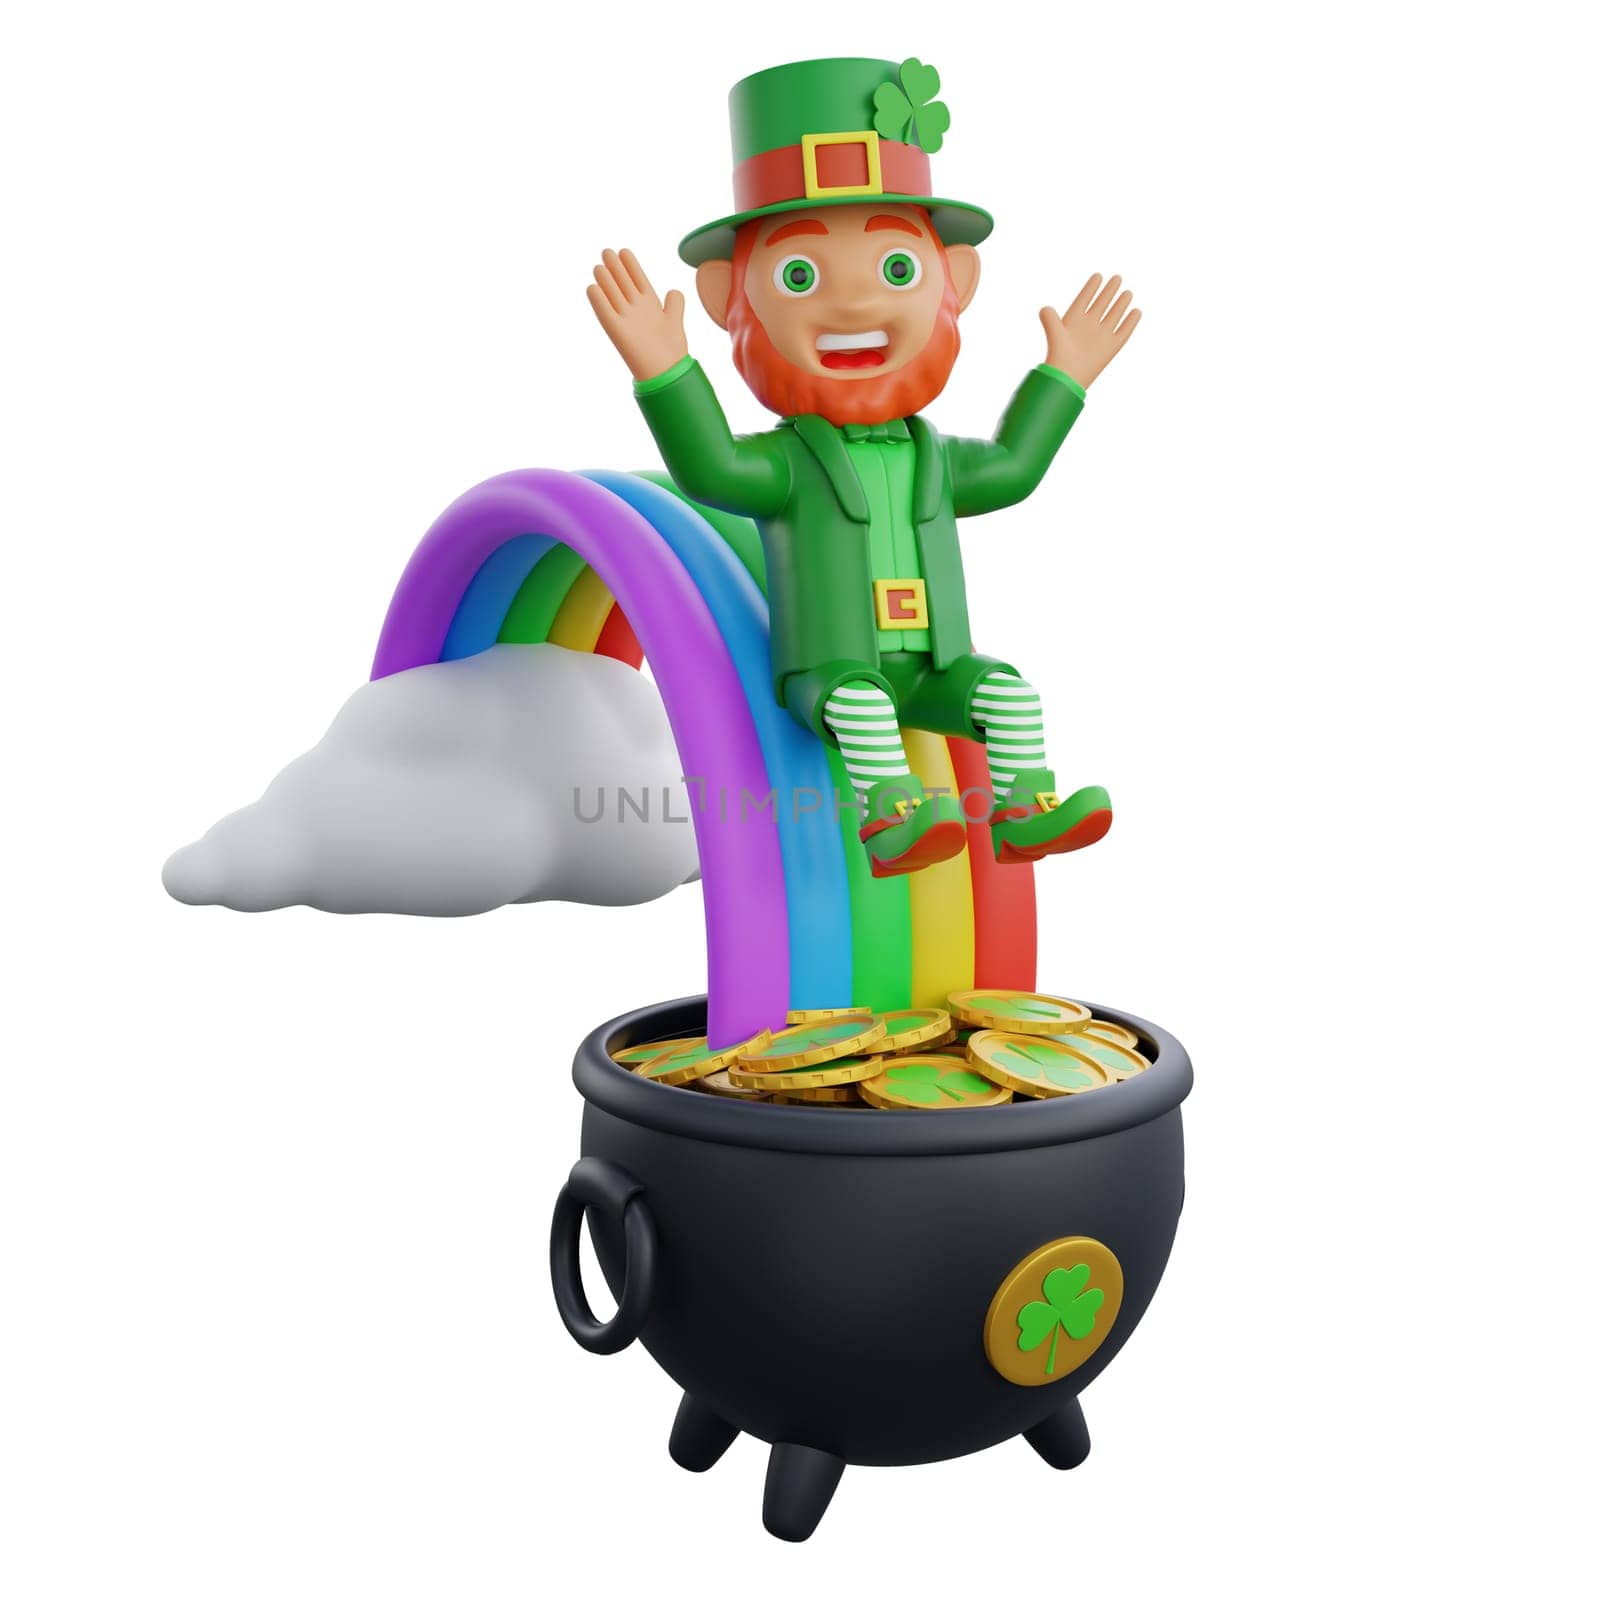 3D illustration of St. Patrick's Day character leprechaun leaping over a rainbow by Rahmat_Djayusman